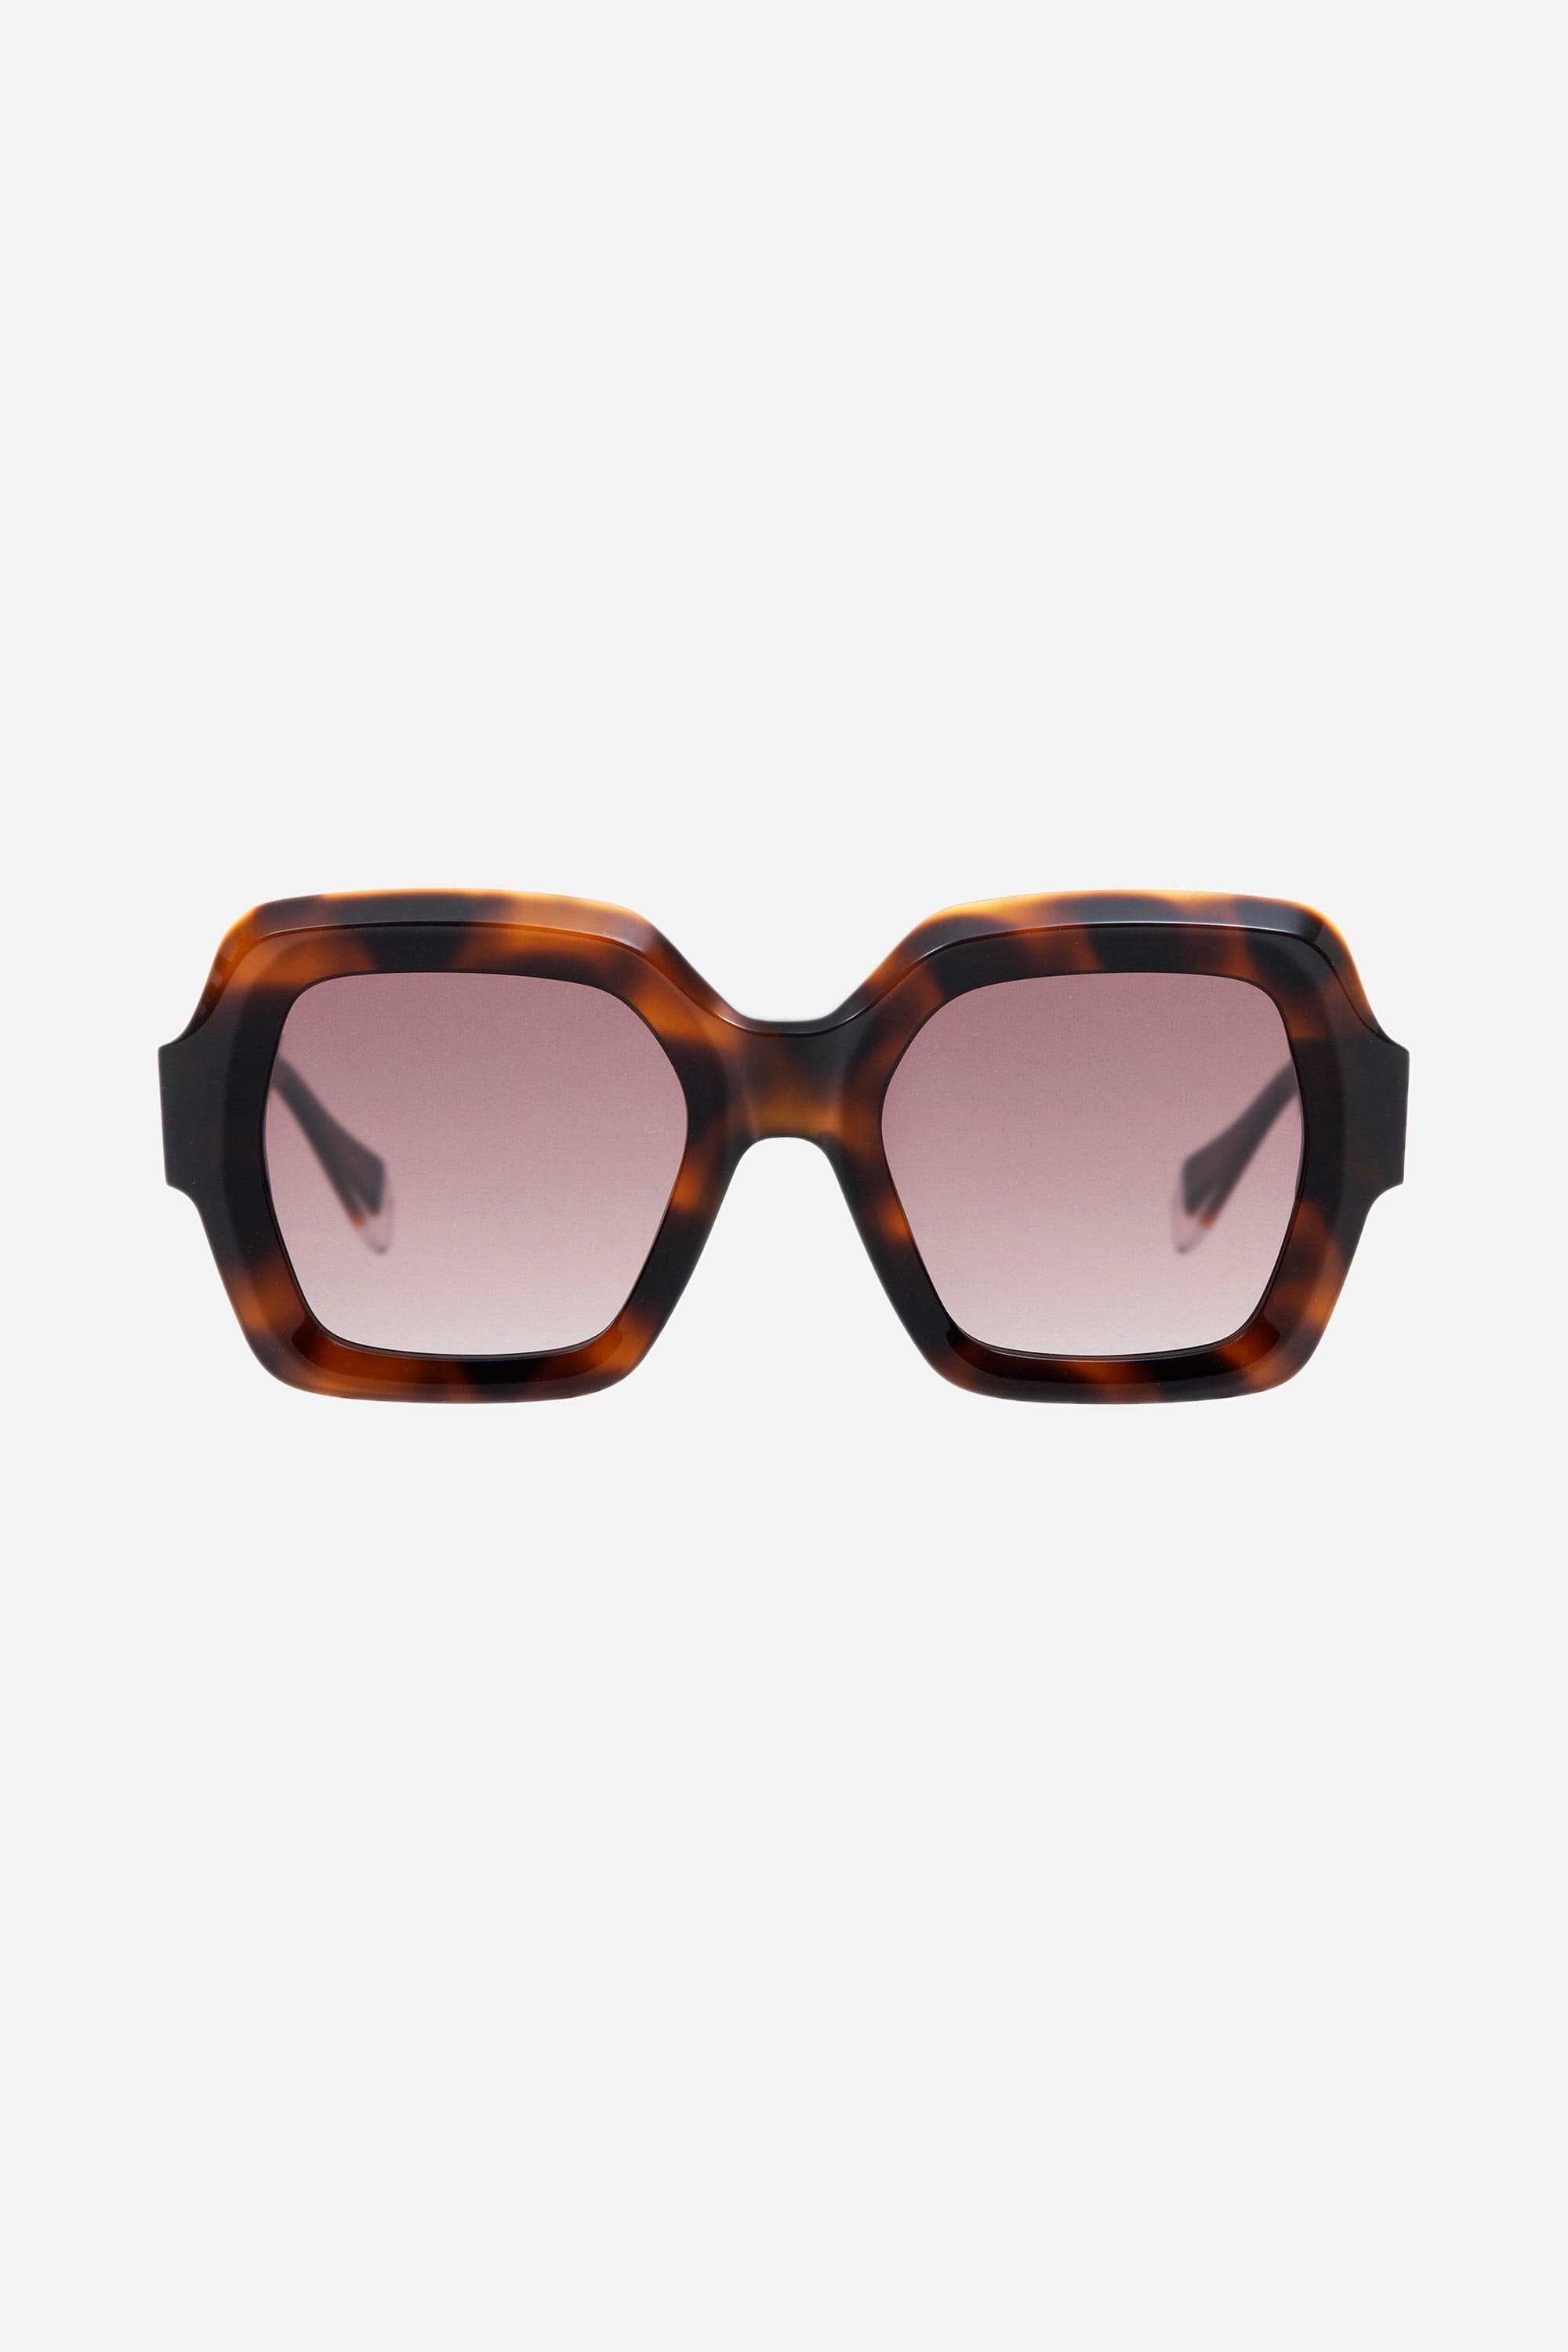 Gigi Studios hexagonal havana sunglasses - Eyewear Club